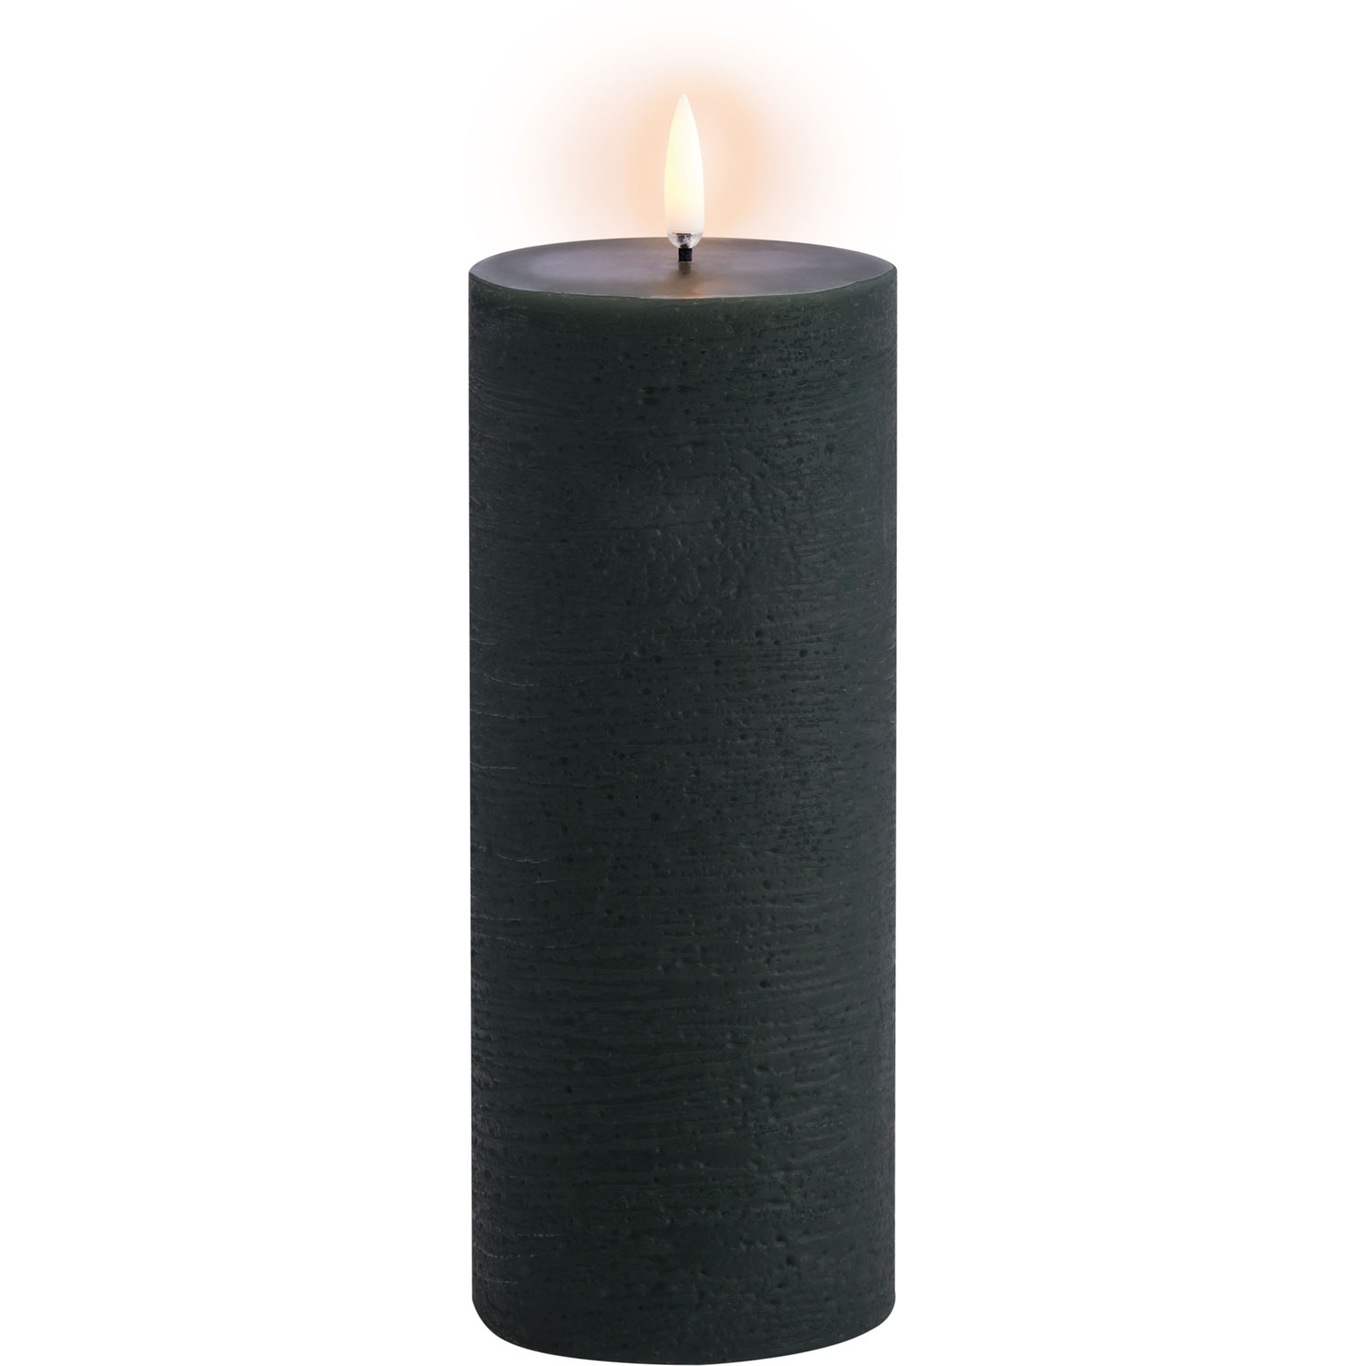 LED Pillar Candle 7,8x20,3 cm, Pine Green